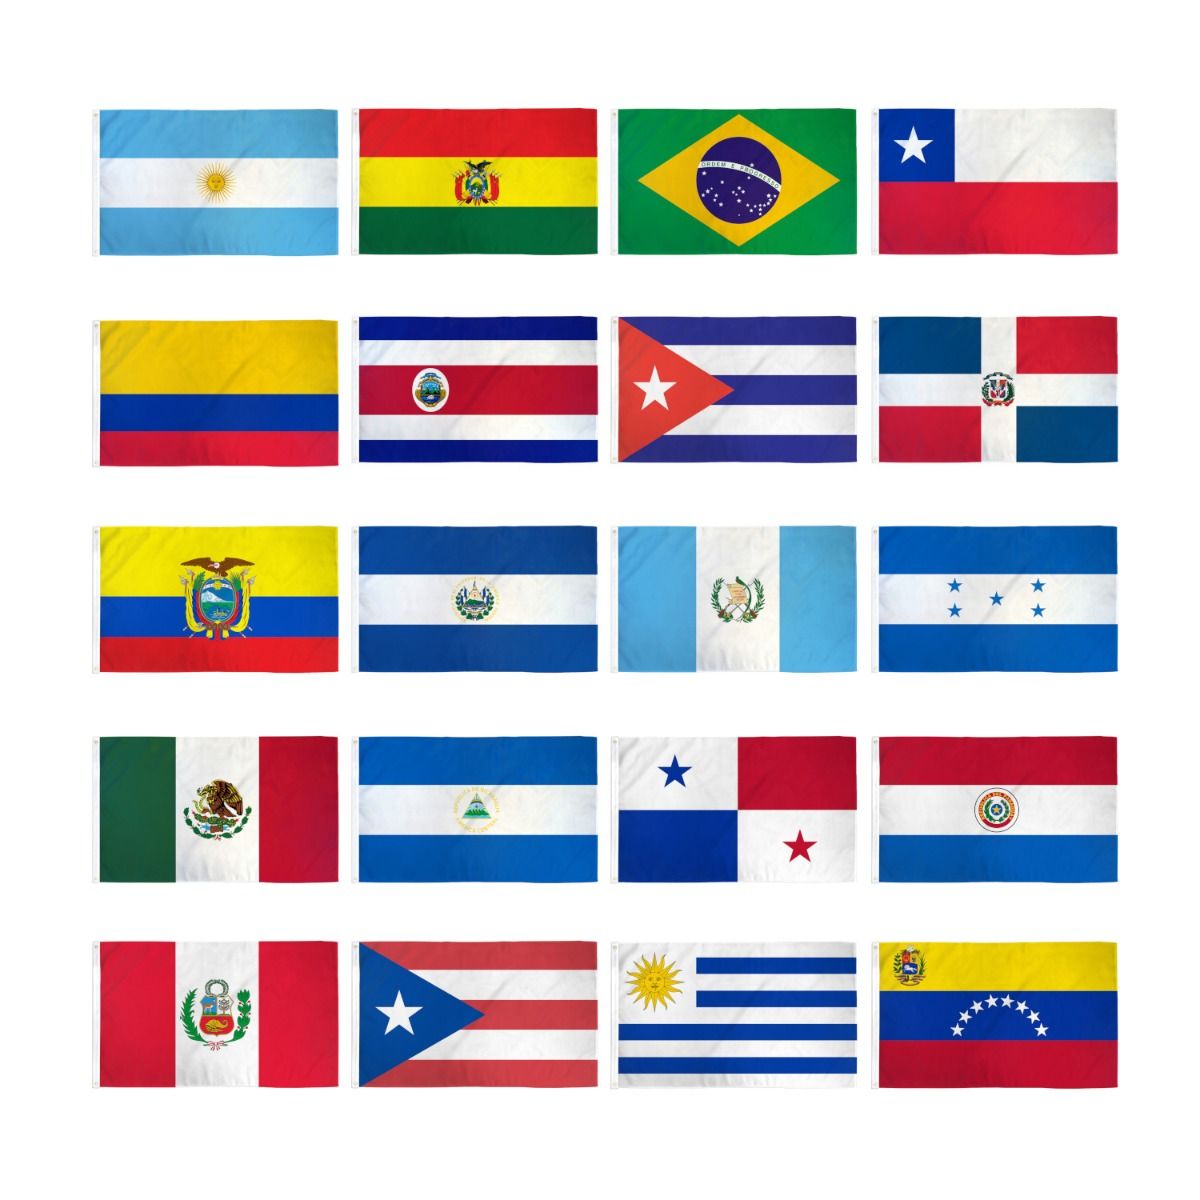 Latino countries